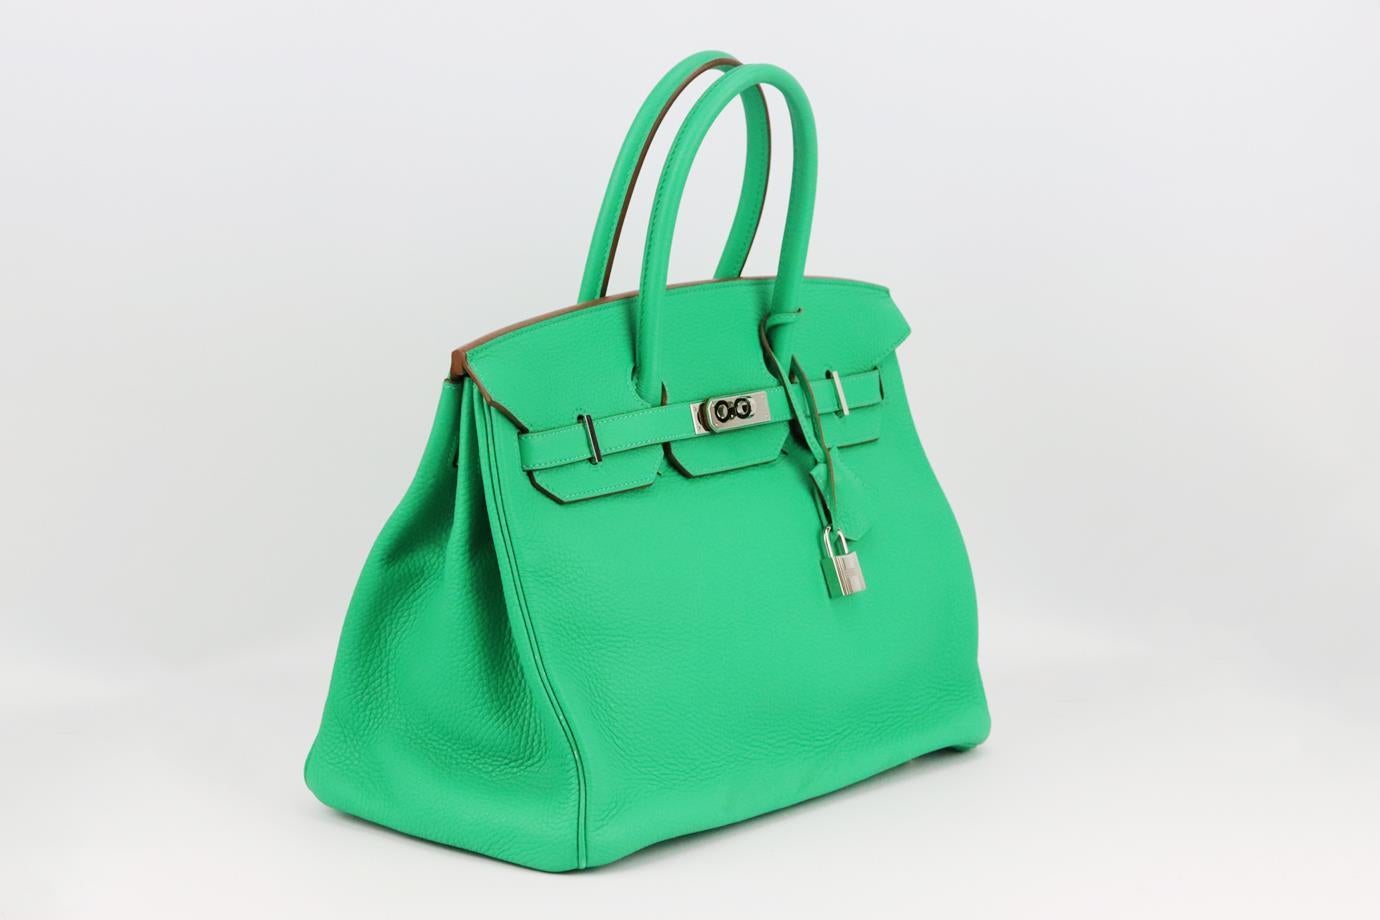 Hermès 2012 Birkin 35cm Togo Leather Bag For Sale 1